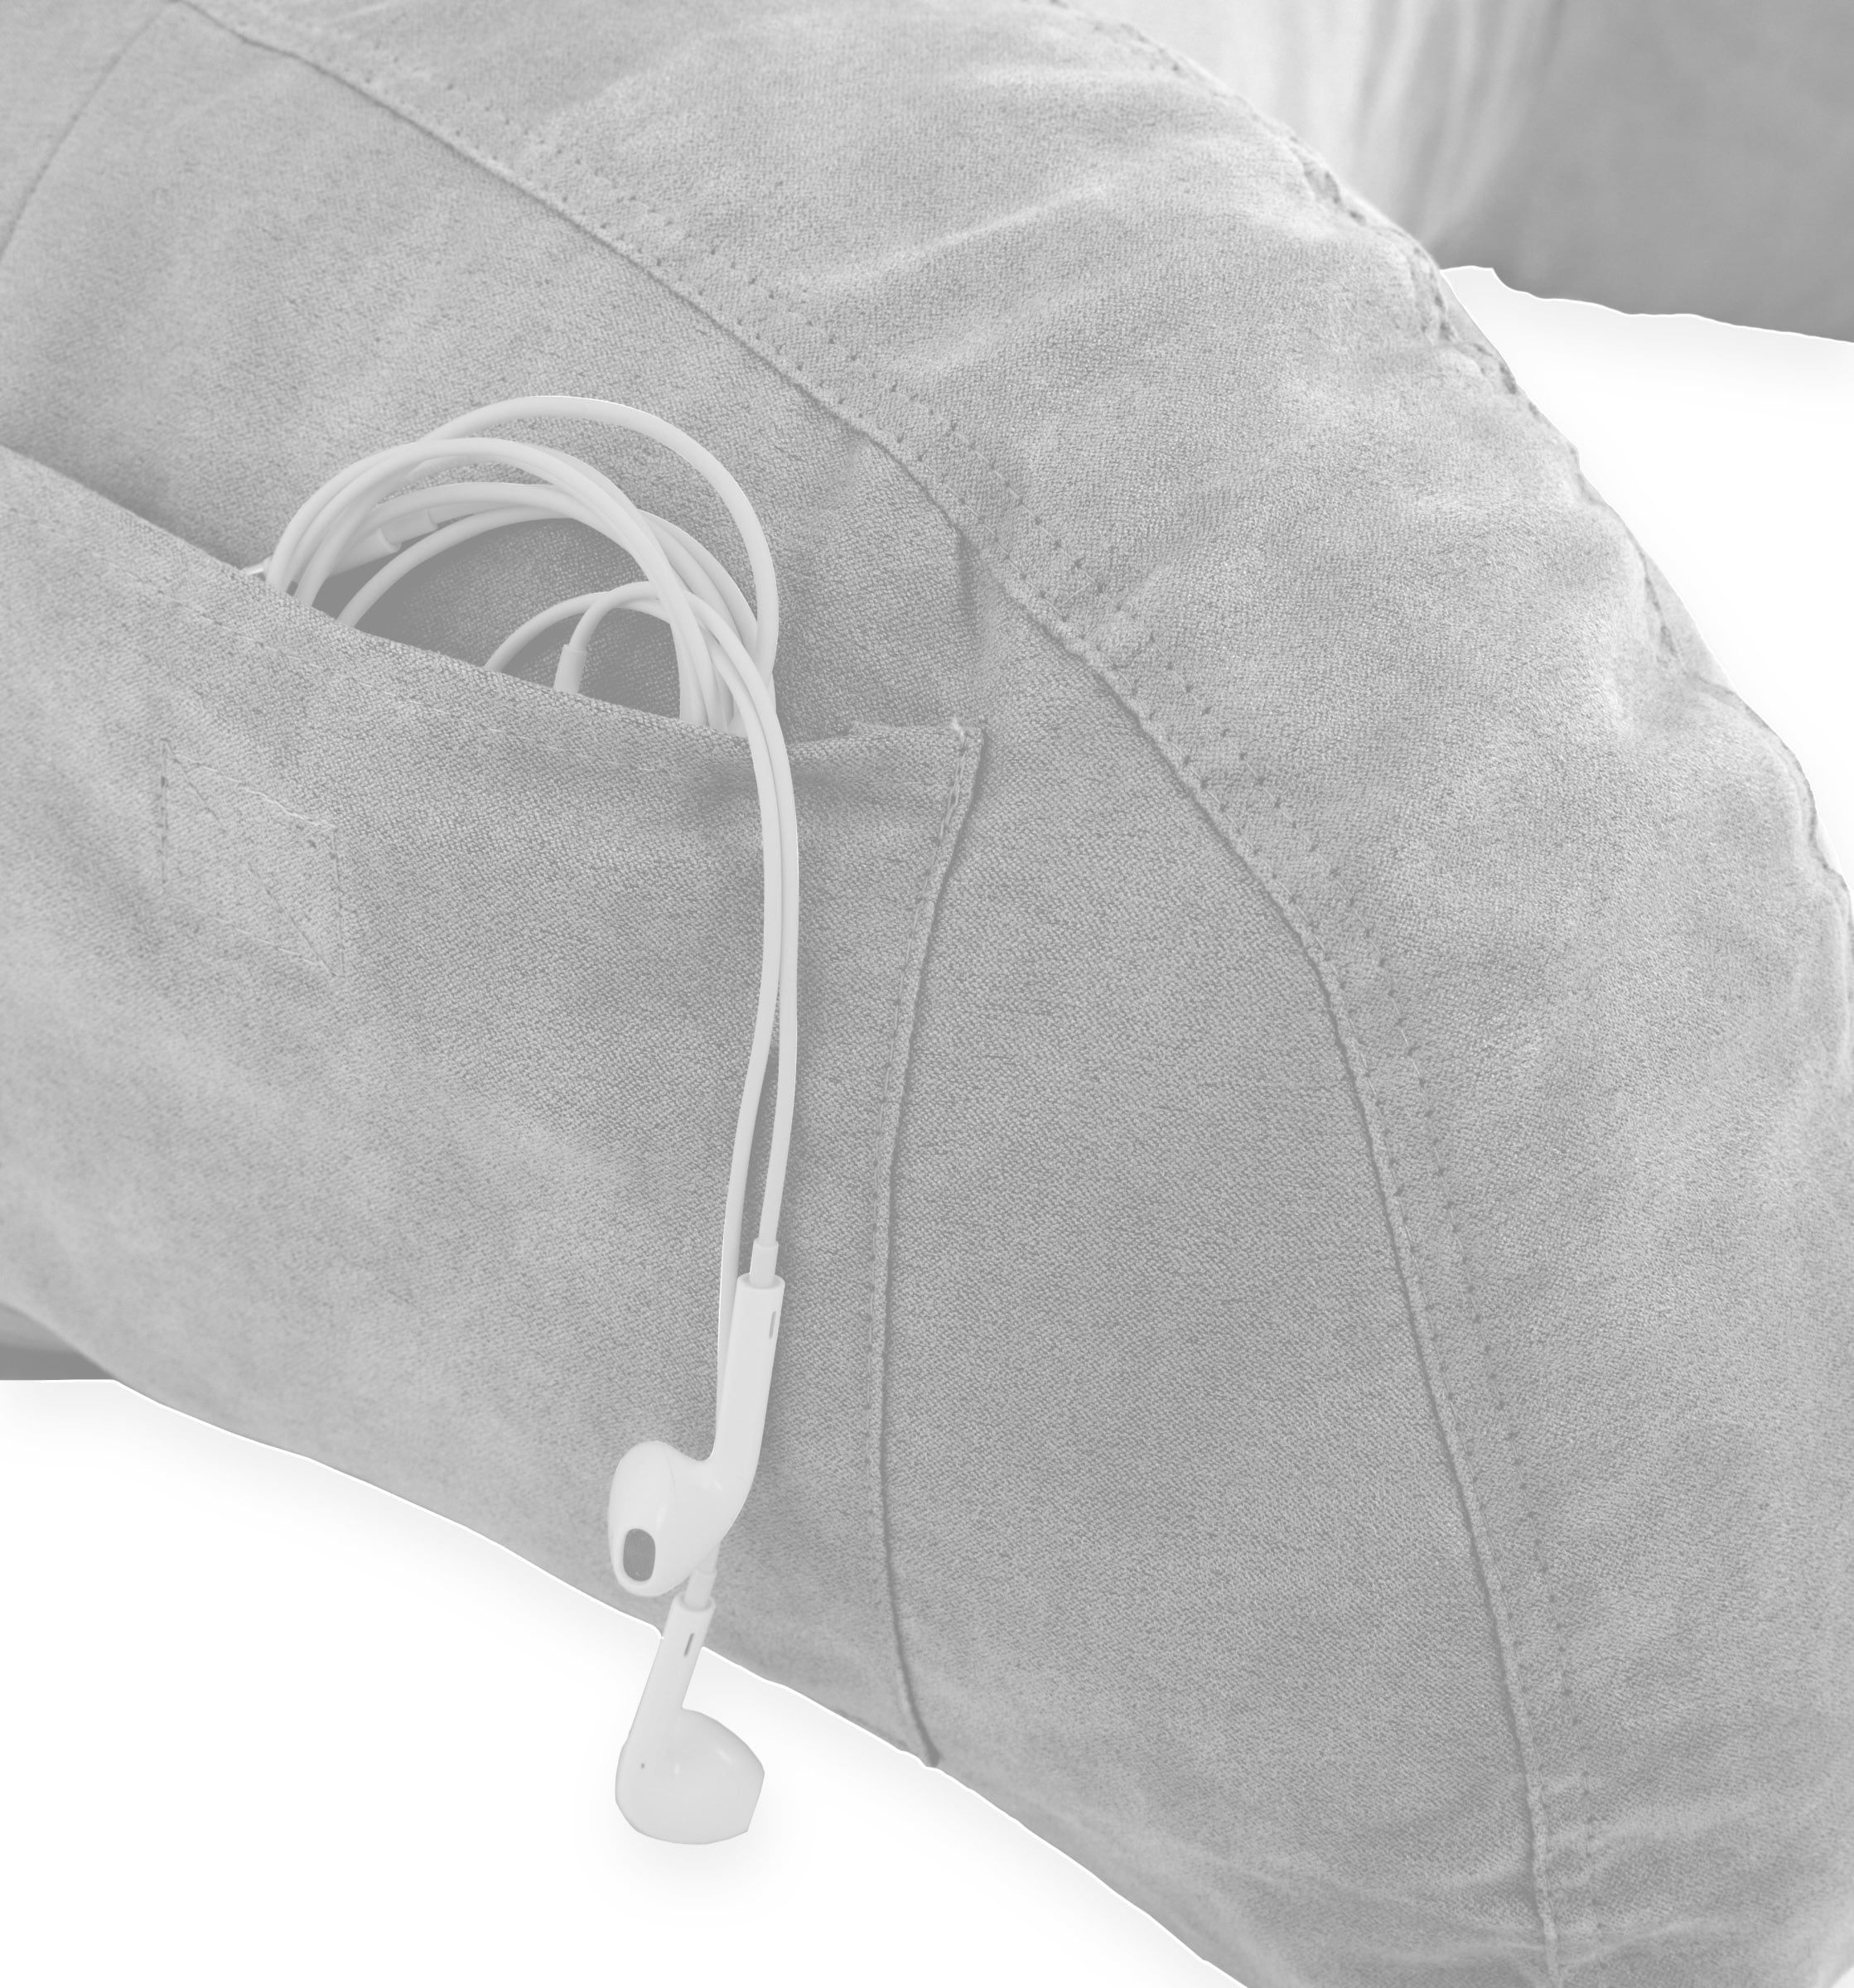 Deluxe Comfort Microsuede Throw Pillows, 18 x